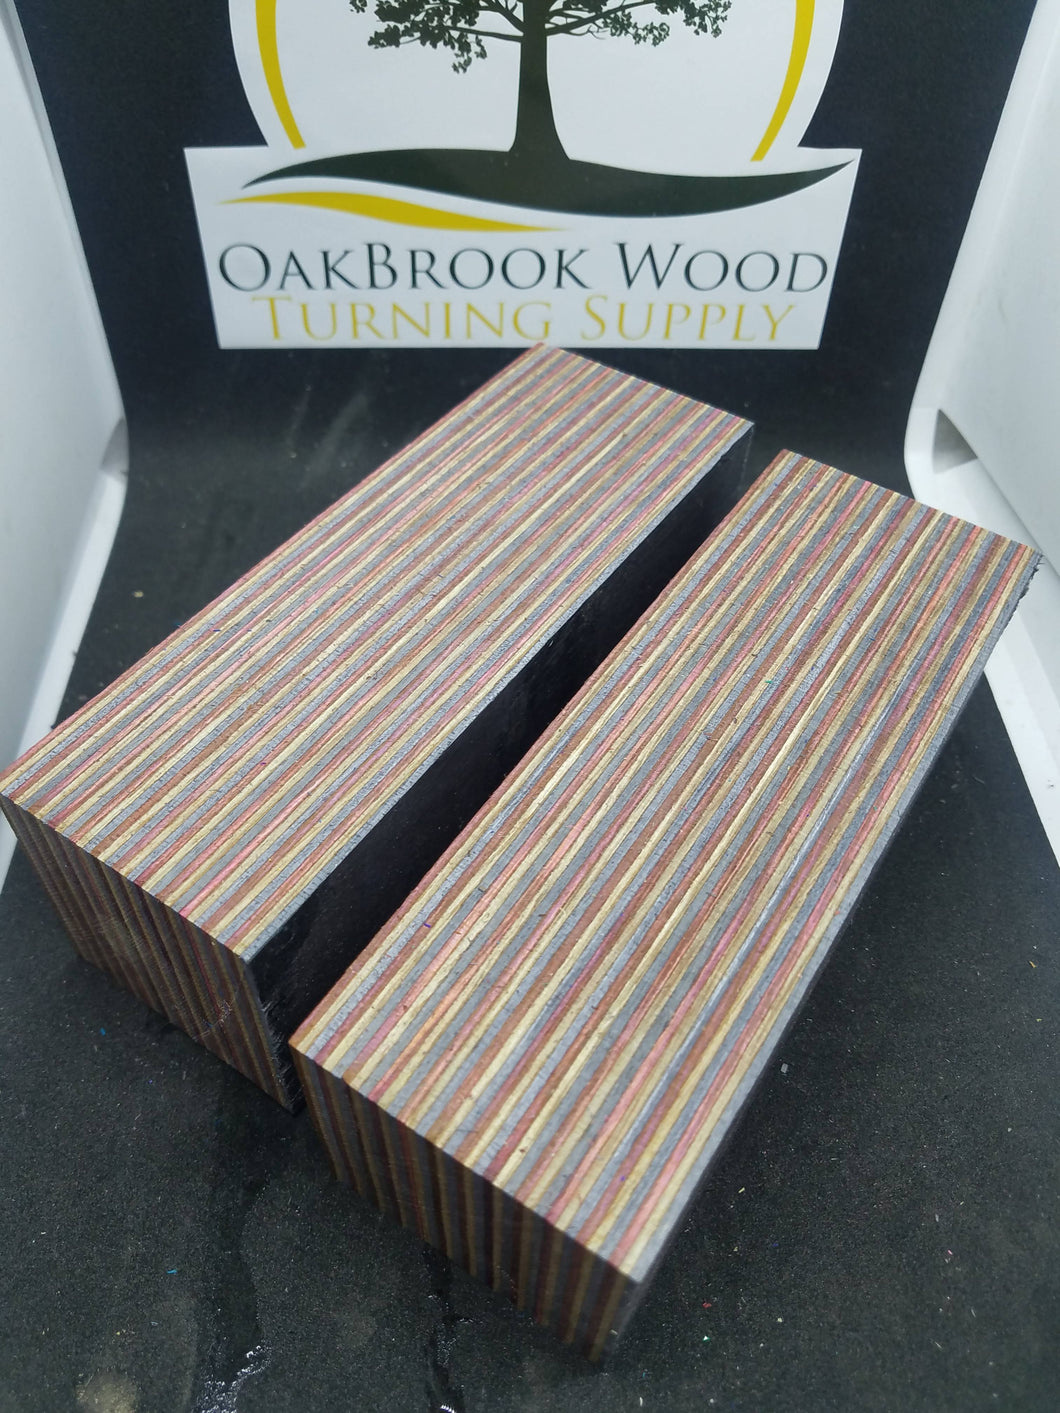 Spectraply Royal Jacaranda - Oakbrook Wood Turning Supply